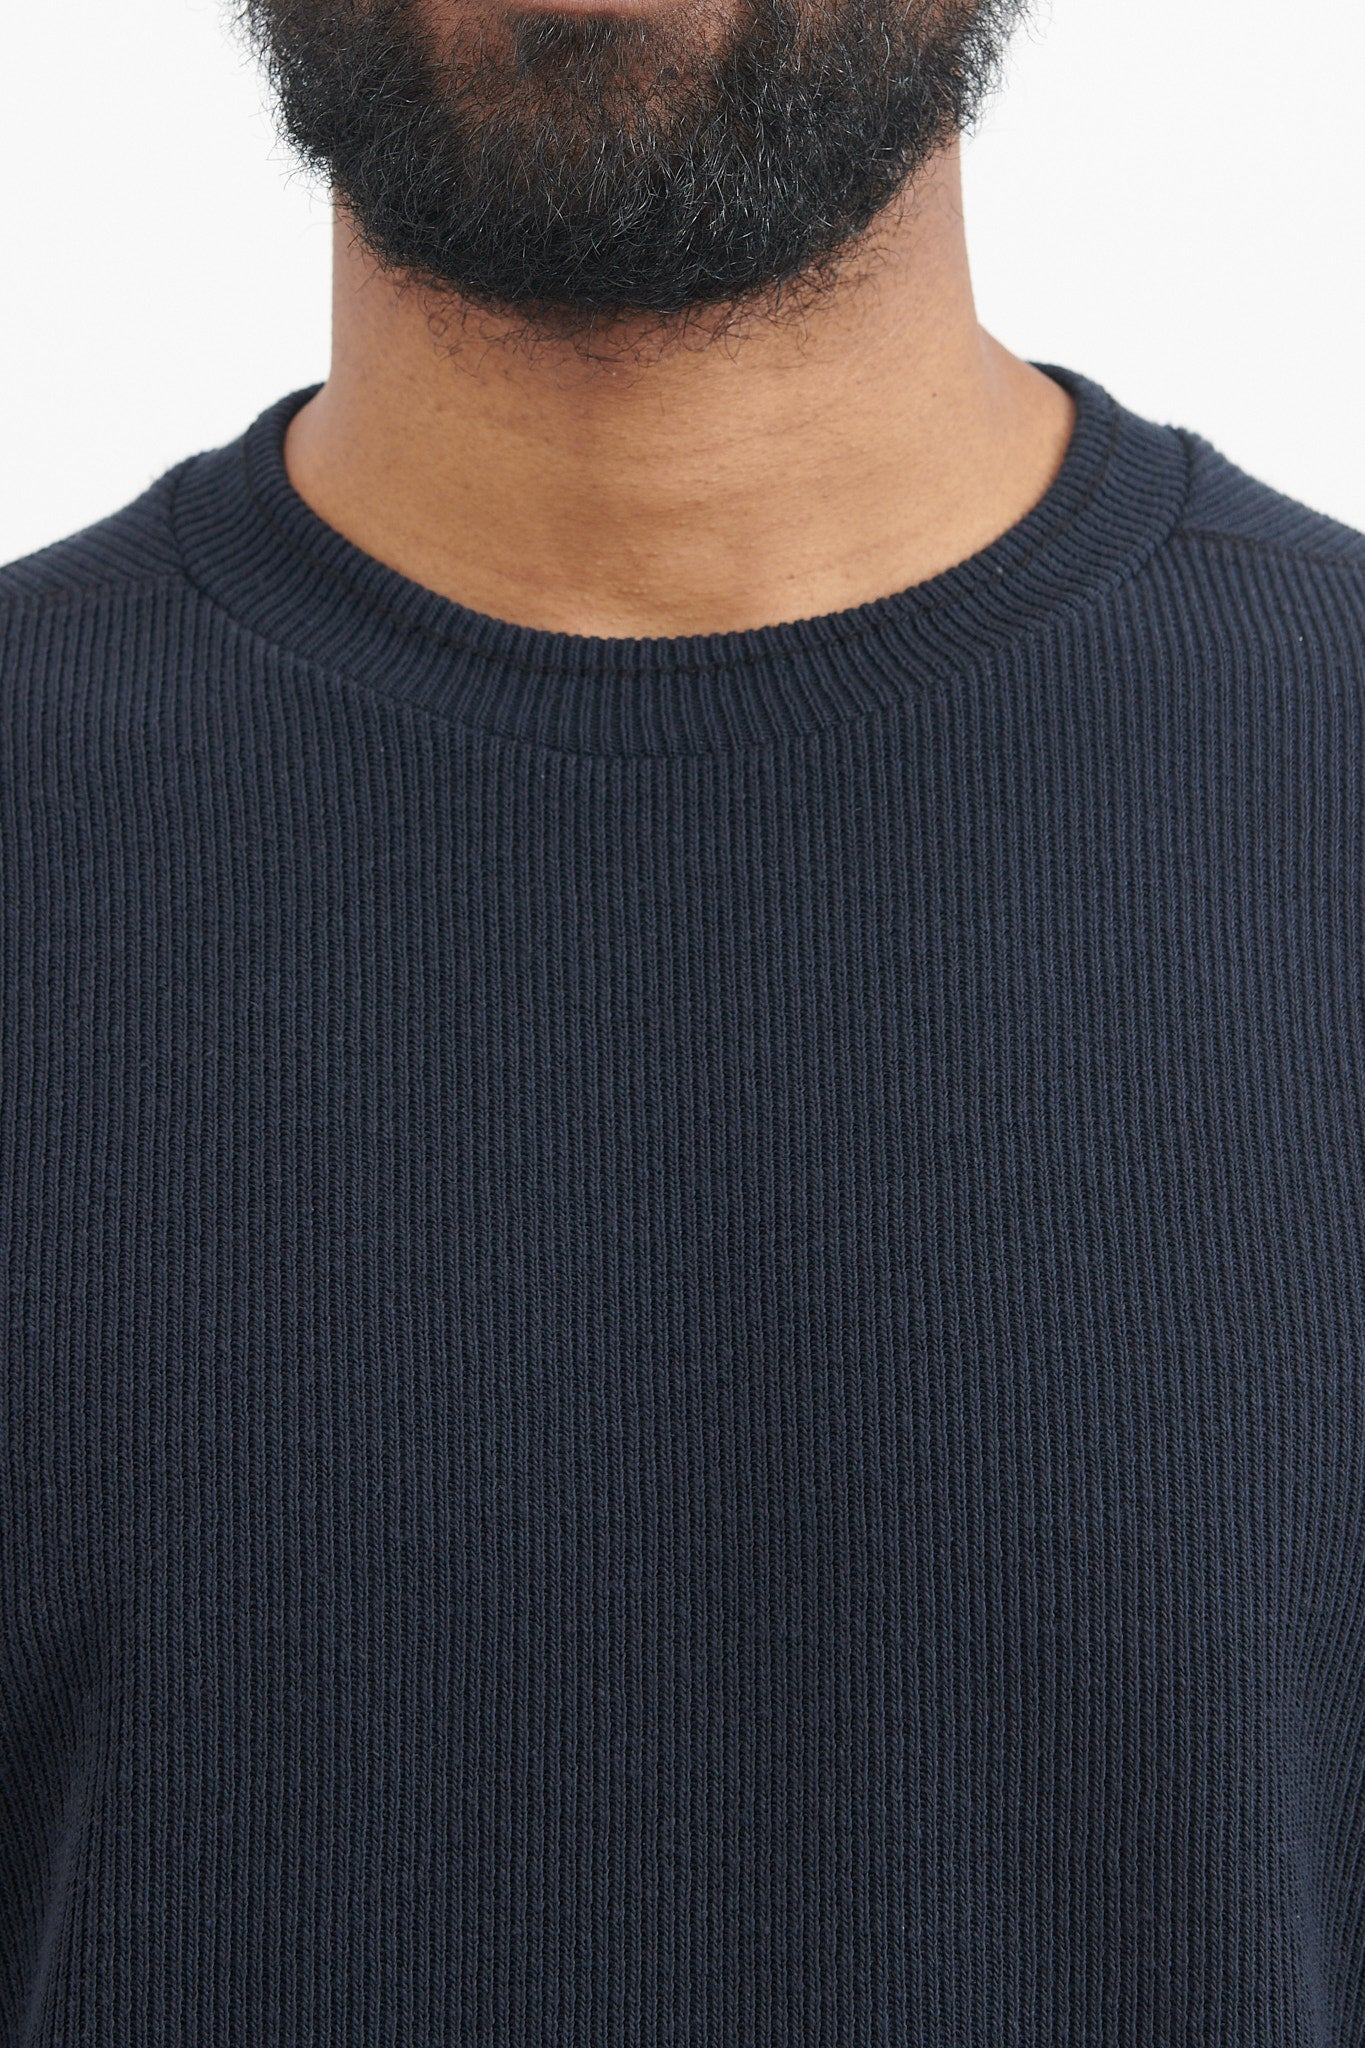 65656 Cotton Nylon Ribbed Fleece Crewneck Sweatshirt - Navy Blue